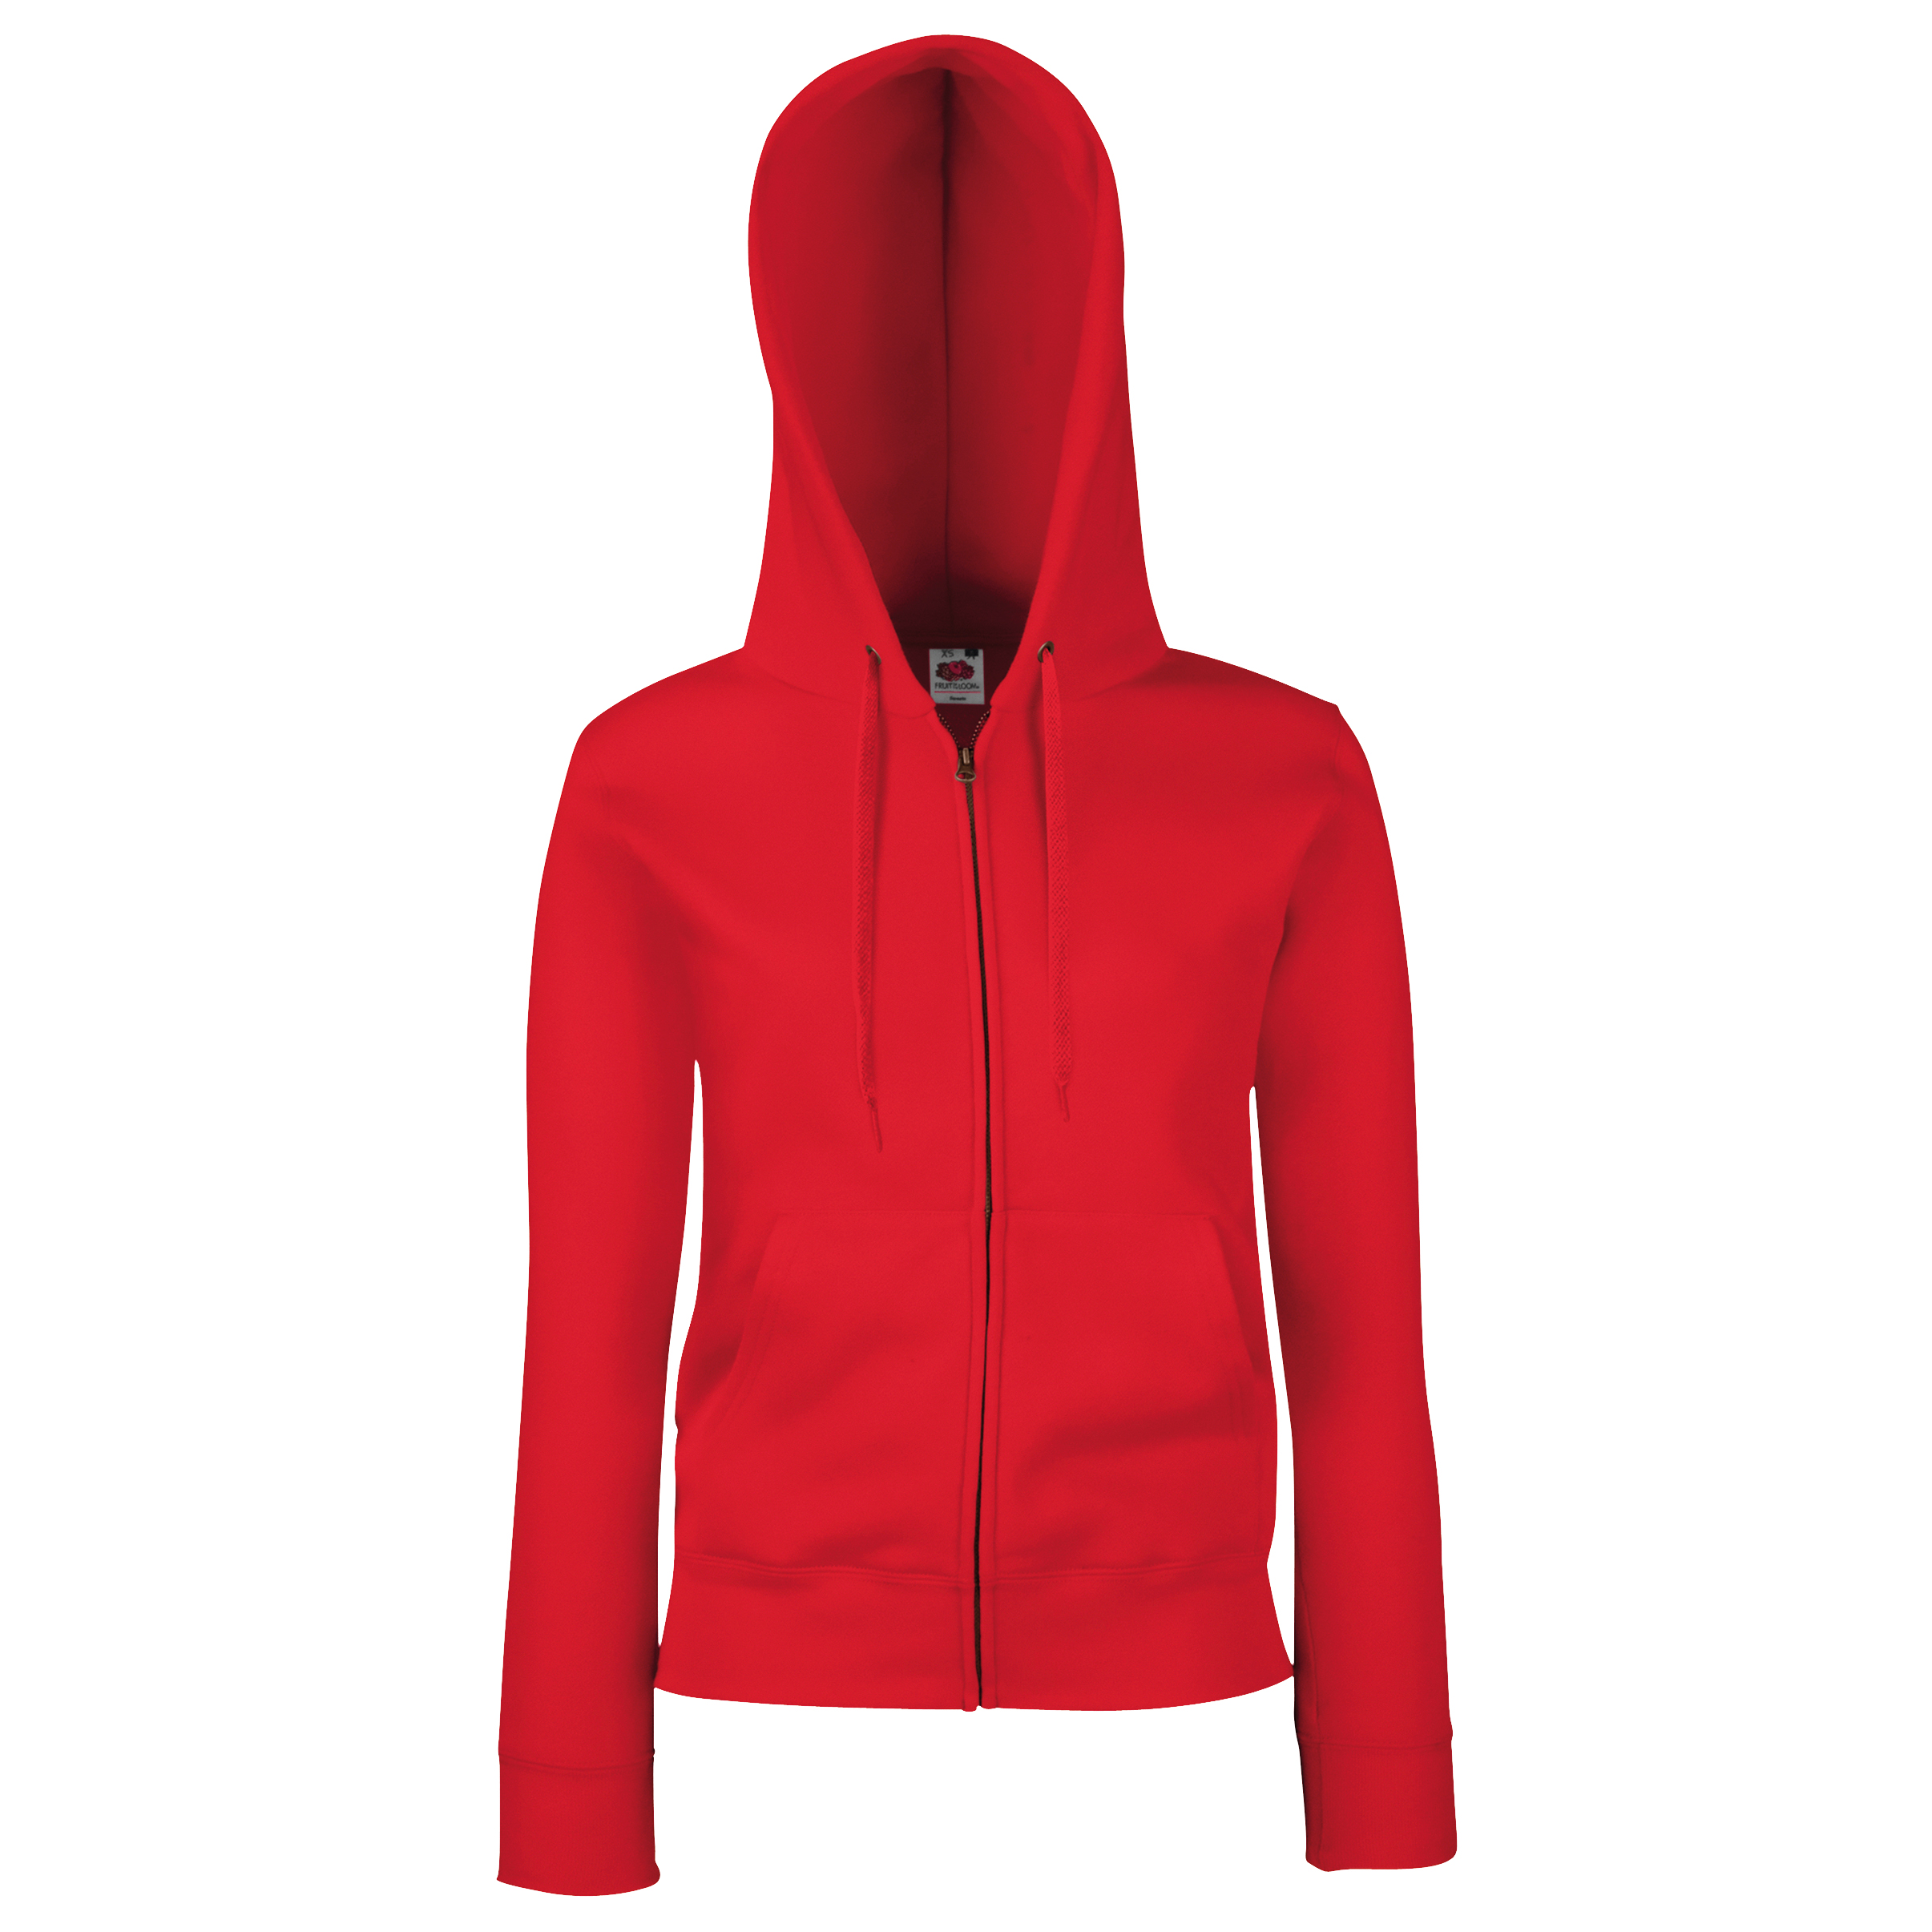 ax-httpswebsystems.s3.amazonaws.comtmp_for_downloadfruit-of-the-loom-womens-premium-70-30-hooded-sweatshirt-jacket-red.jpeg